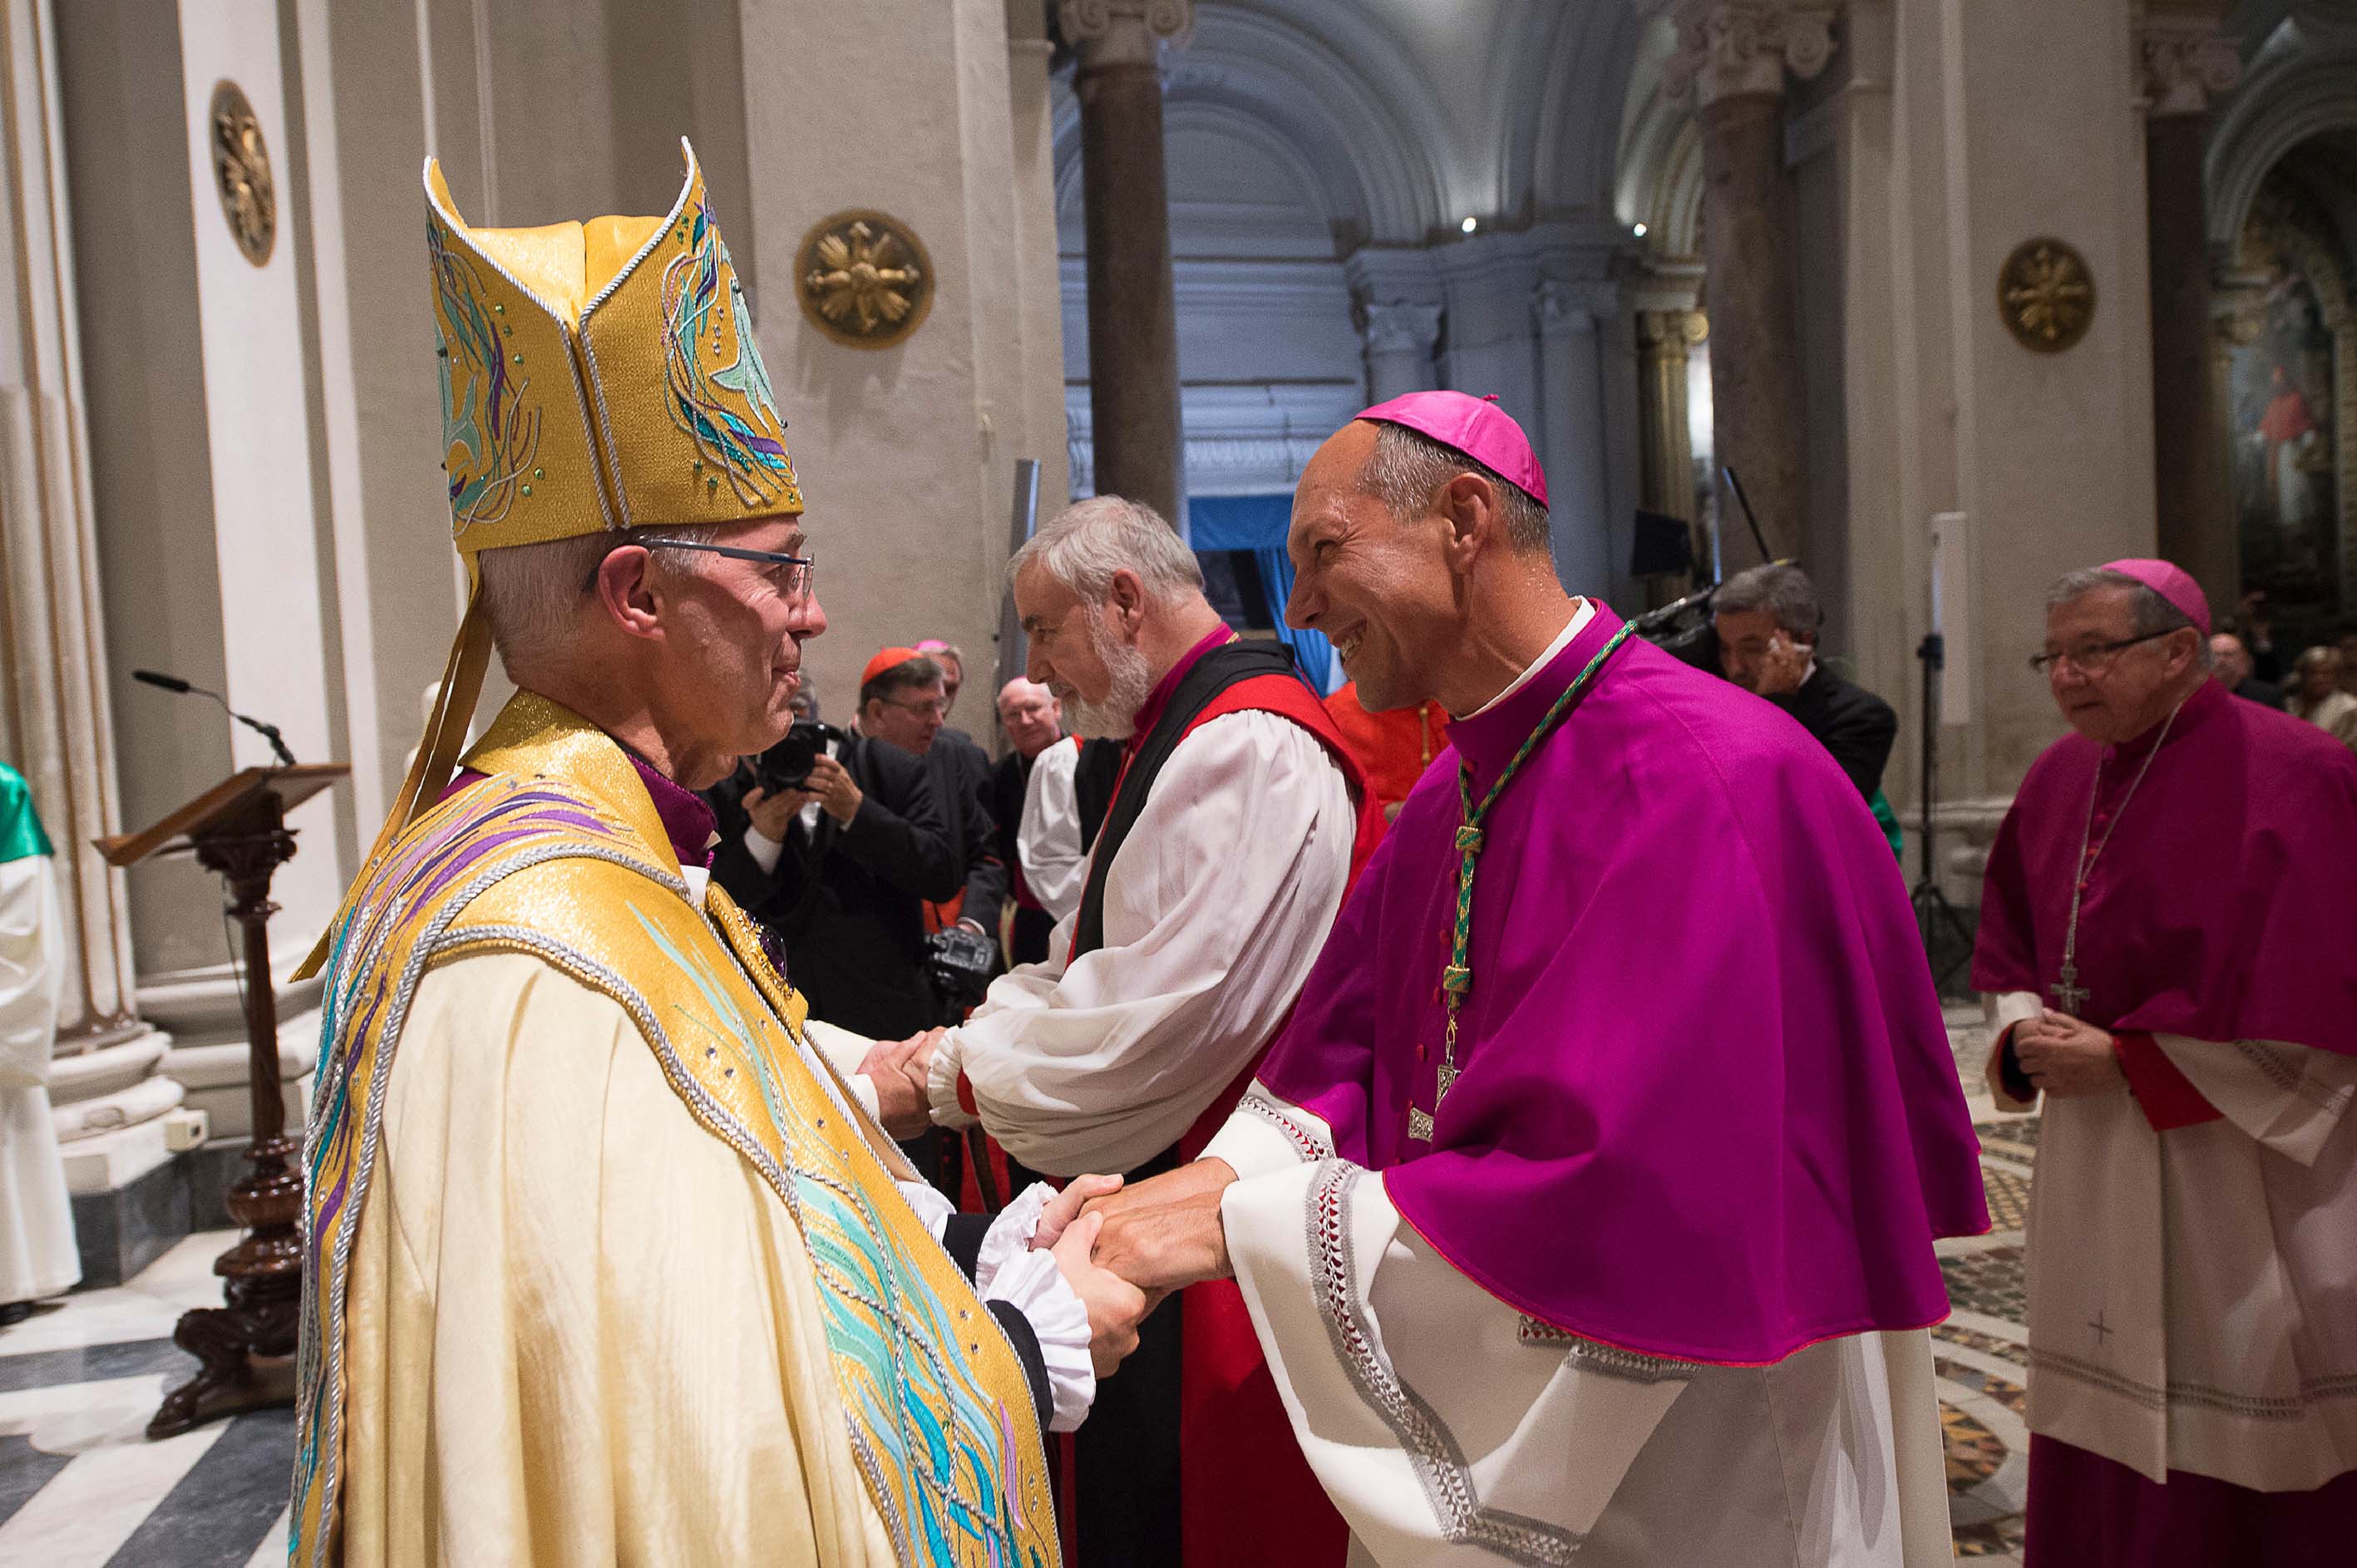 Archbishop Justin Welby commissions Archbishop Donald Bolen, co-chair of IARCCUM, at the Vespers in San Gregorio al Celio